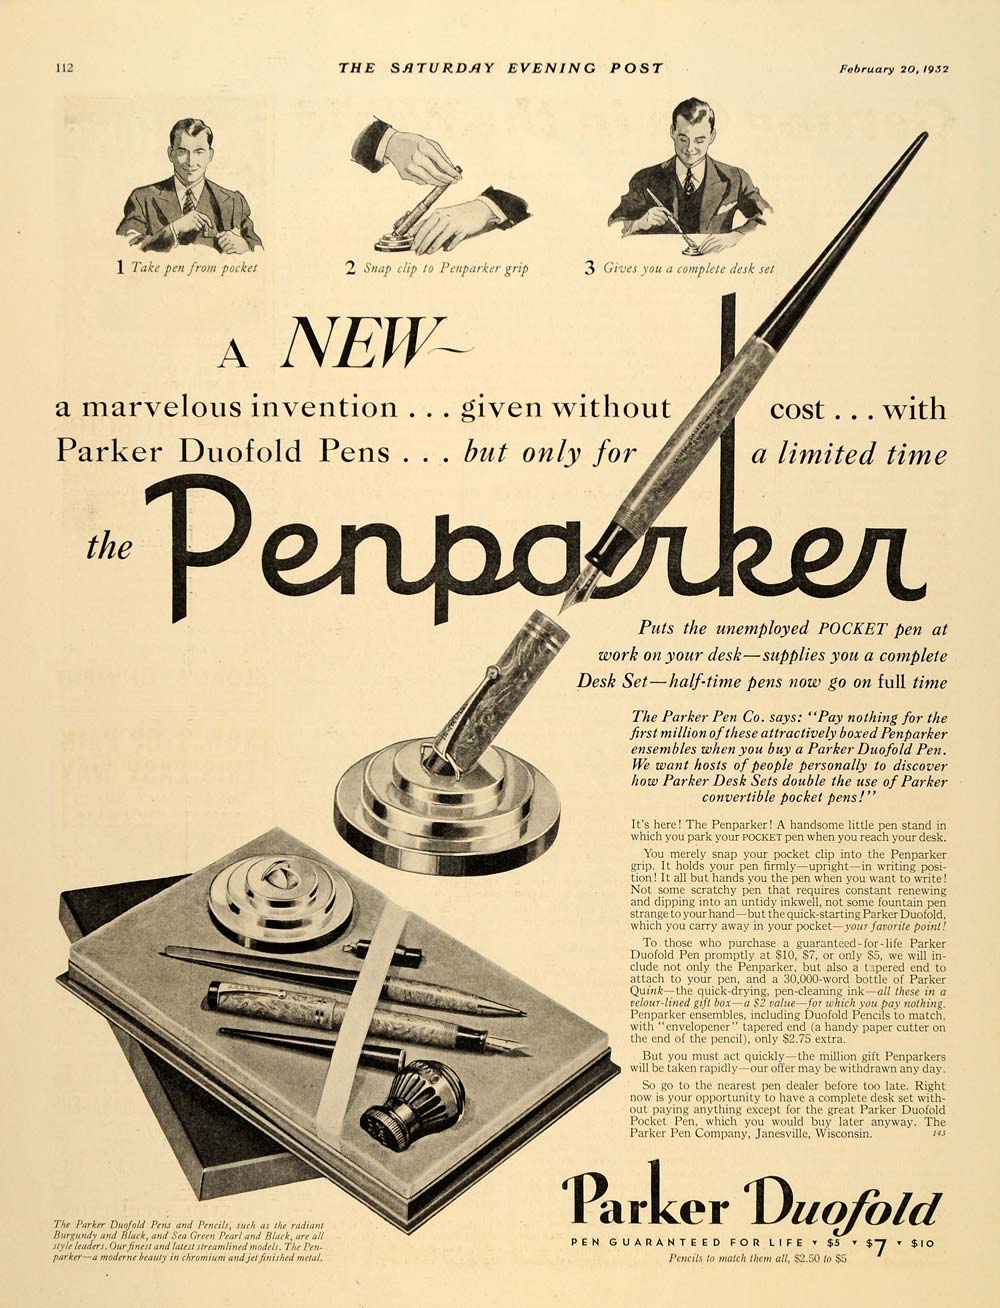 1932 Ad Penparker Duofold Fountain Pen Desk Set Pencils - ORIGINAL SEP3